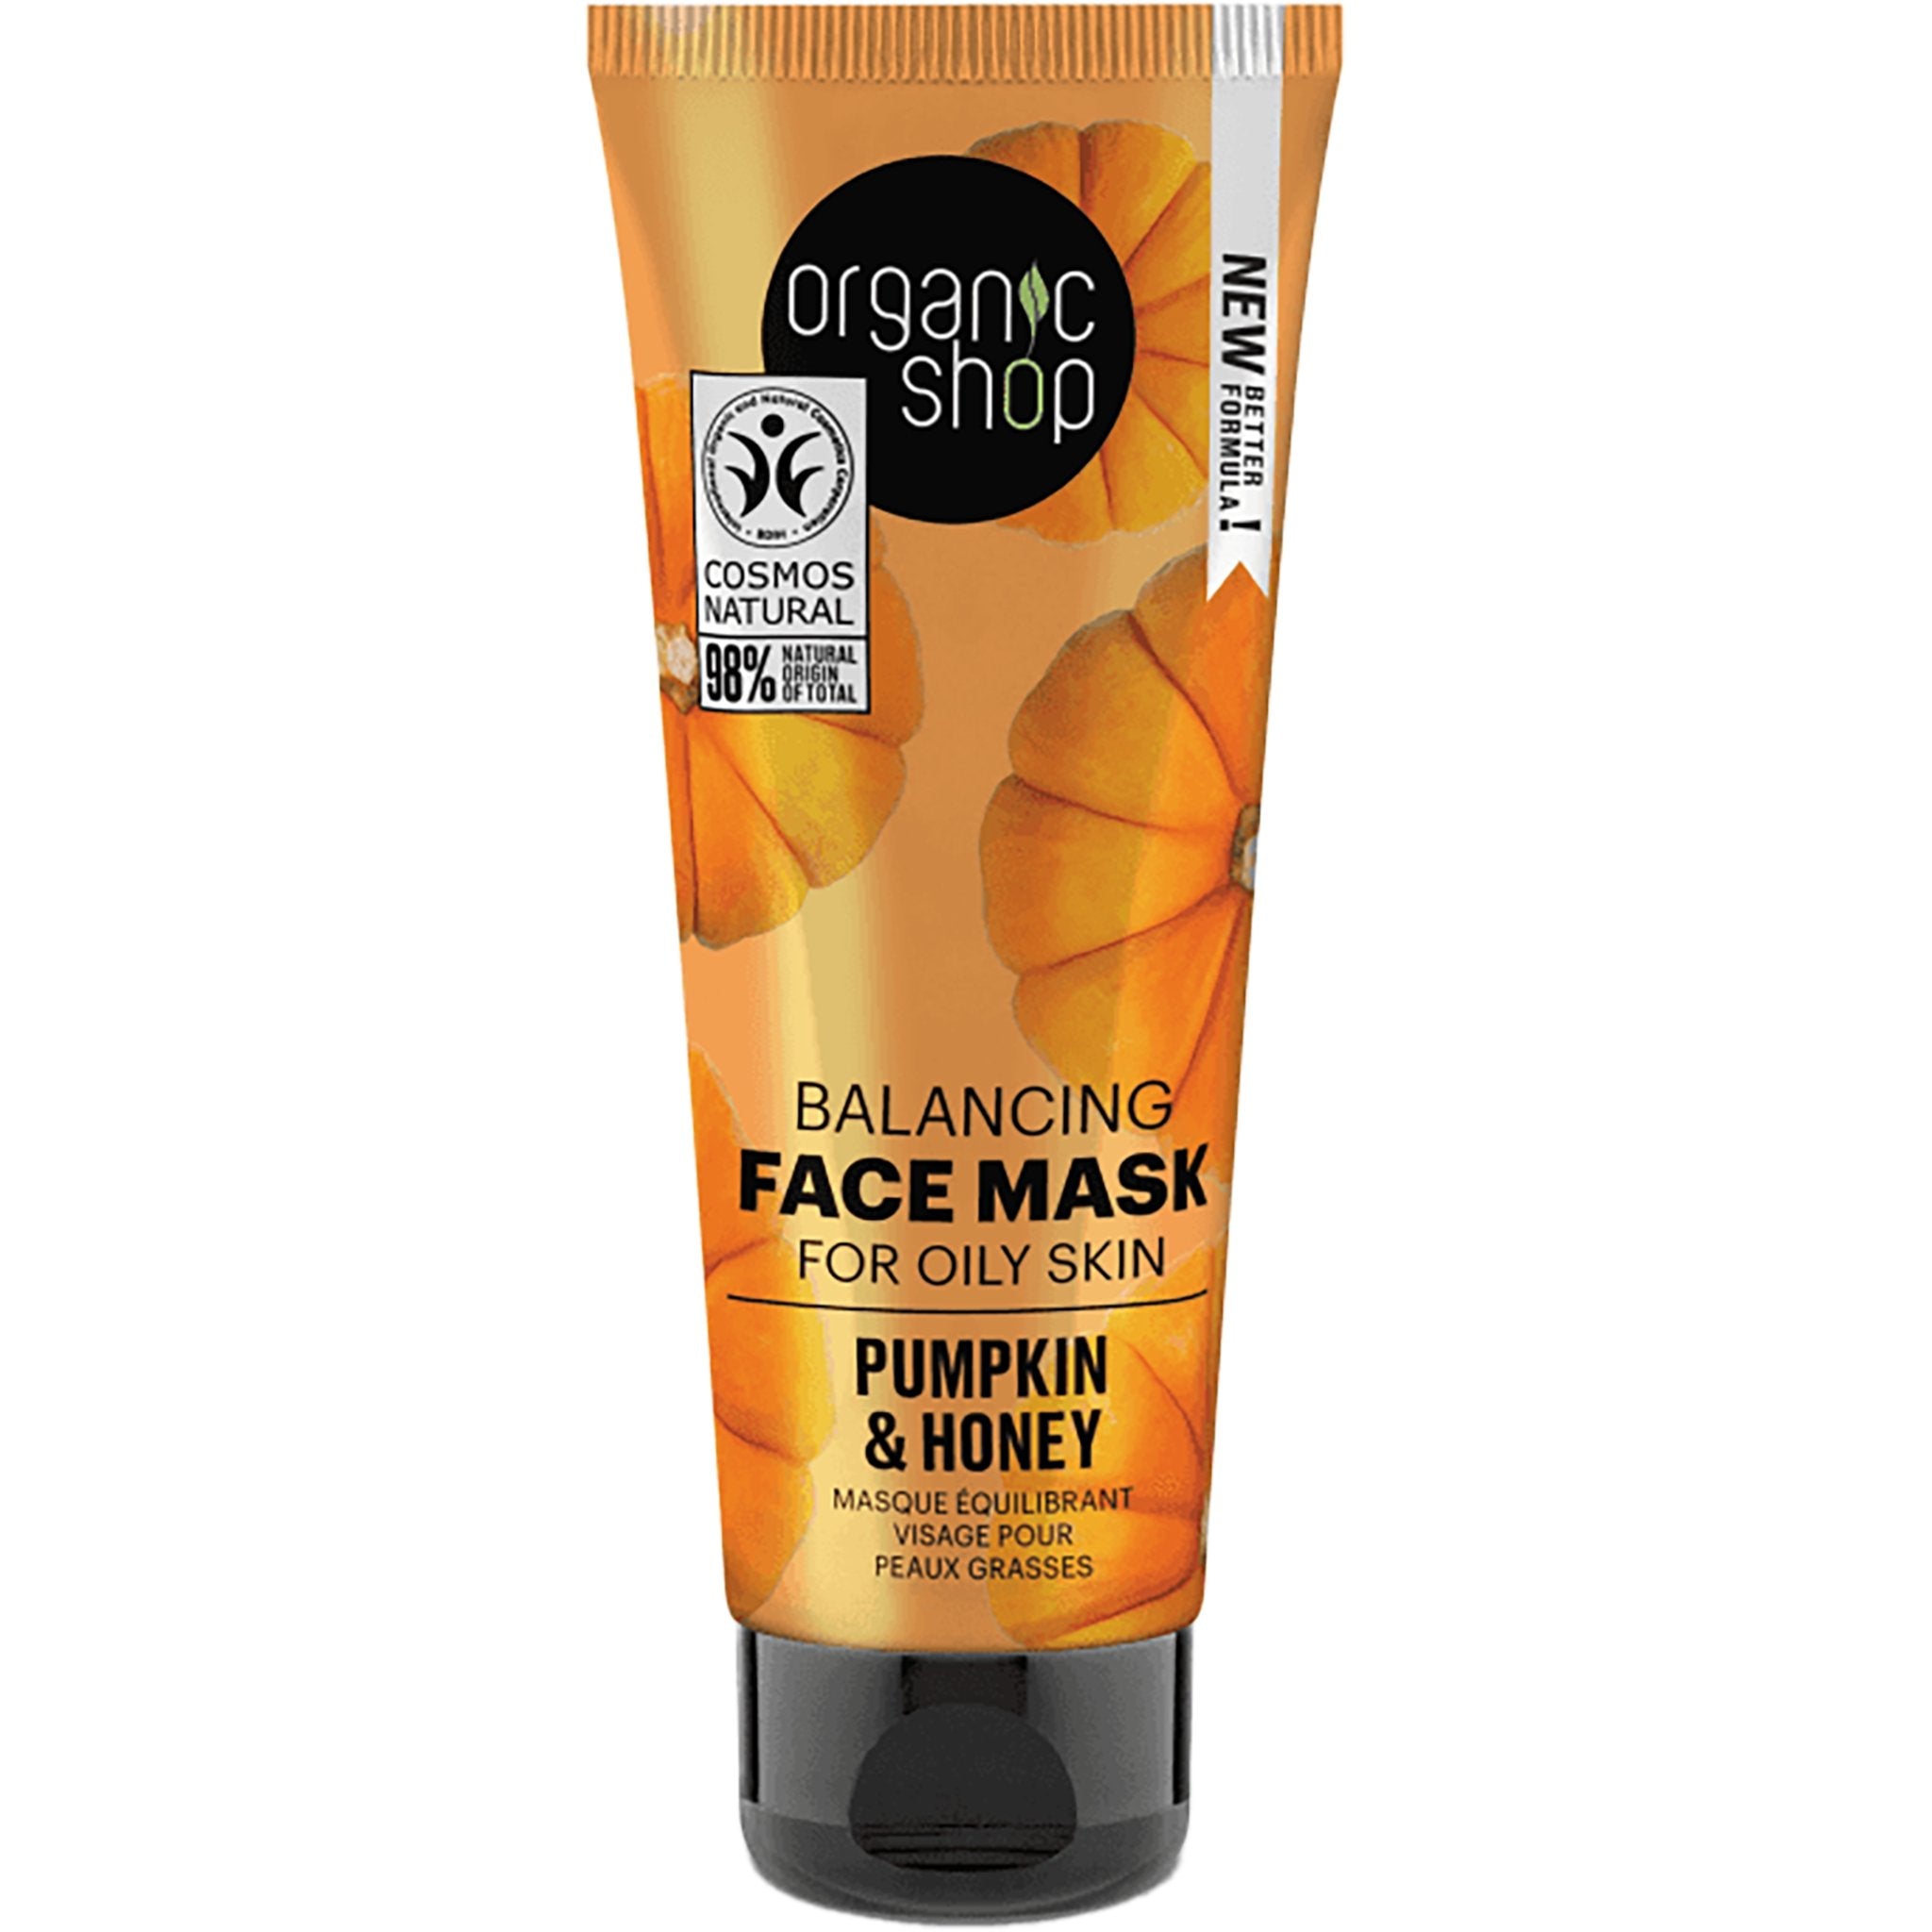 NEW Pumpkin & Honey Balancing Face Mask - mypure.co.uk